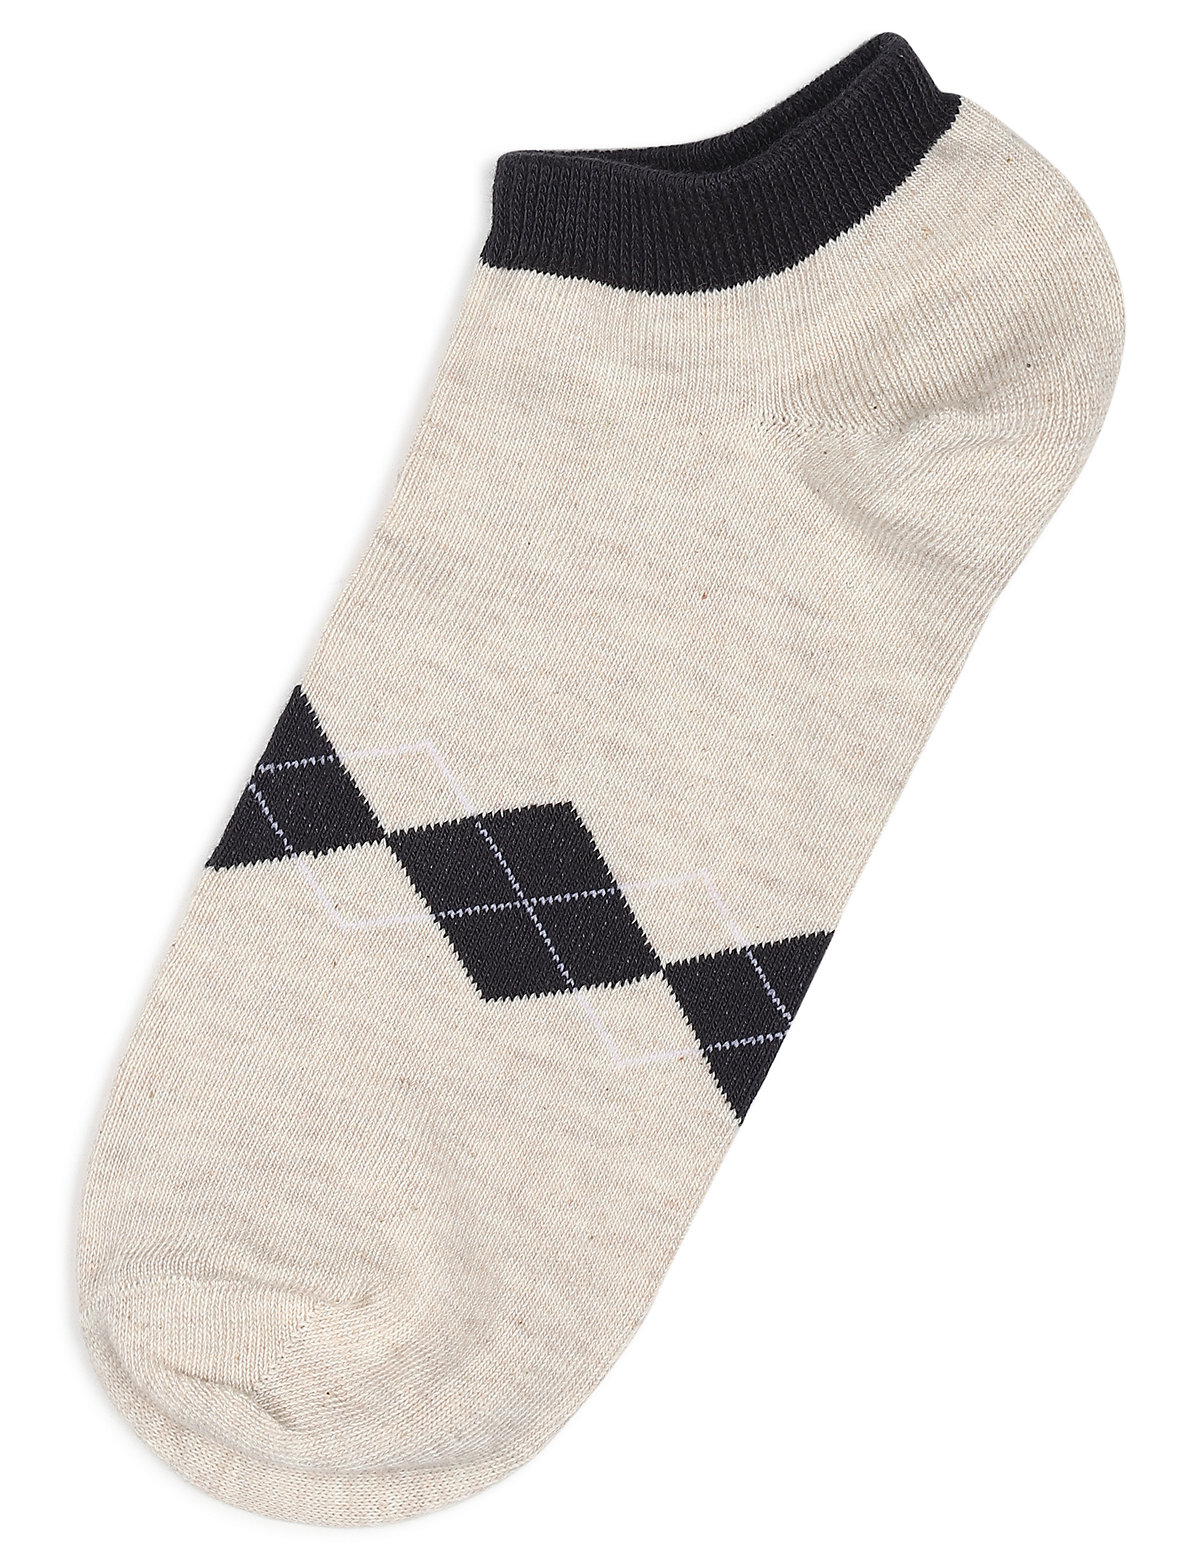 3 Pair of Cotton Mix Argyle Print Socks